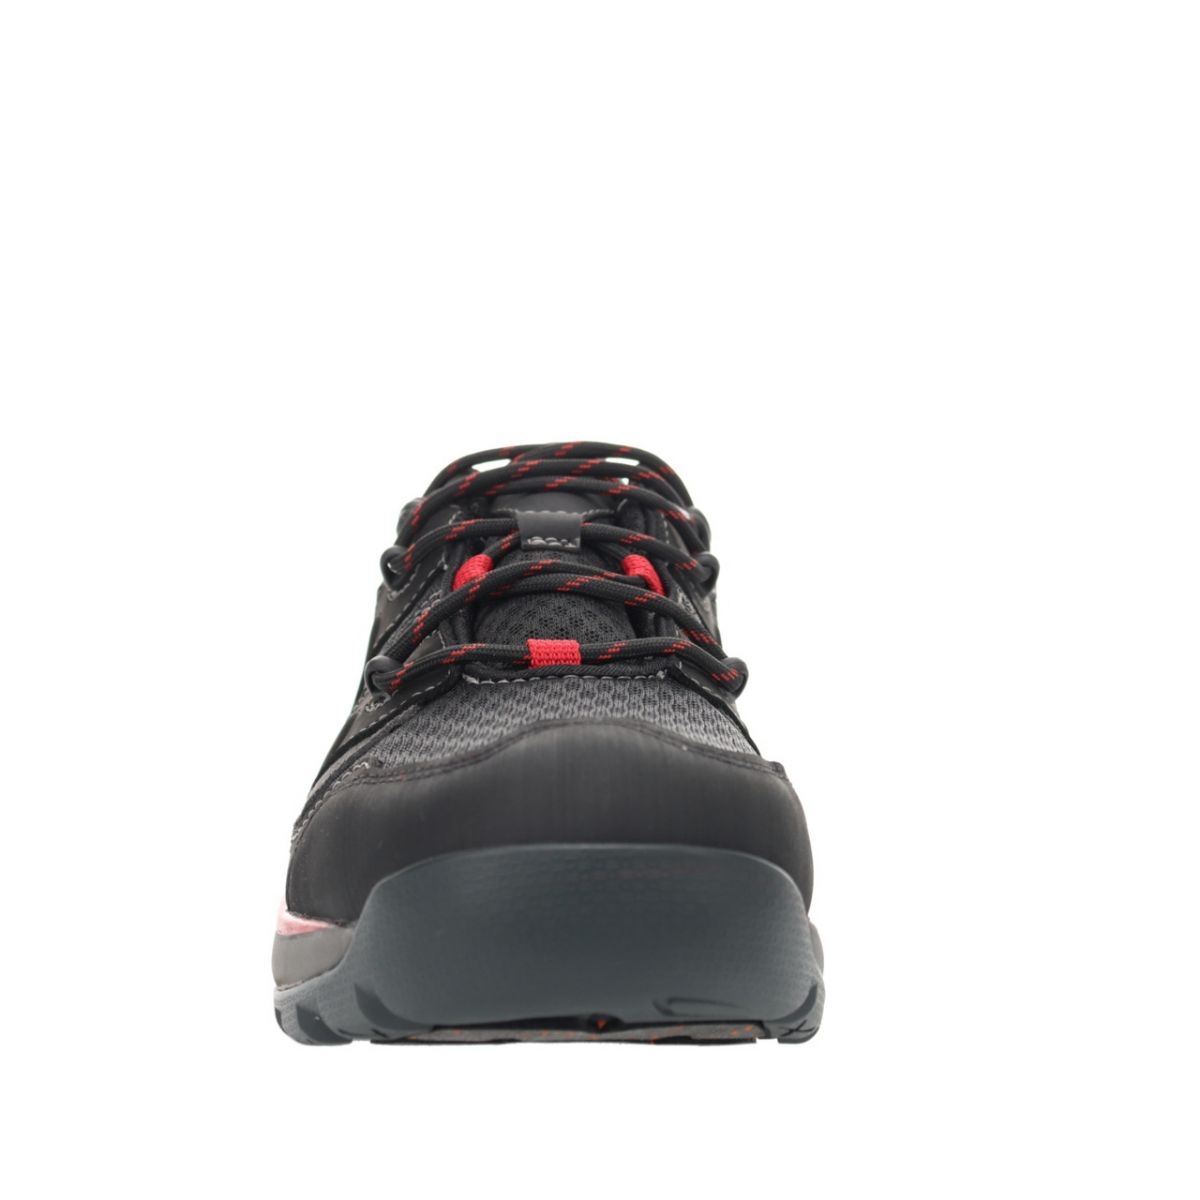 Propet Men's Vercors Hiking Shoe Black/Red - MOA002SBRD BLACK/RED - BLACK/RED, 14 XX-Wide